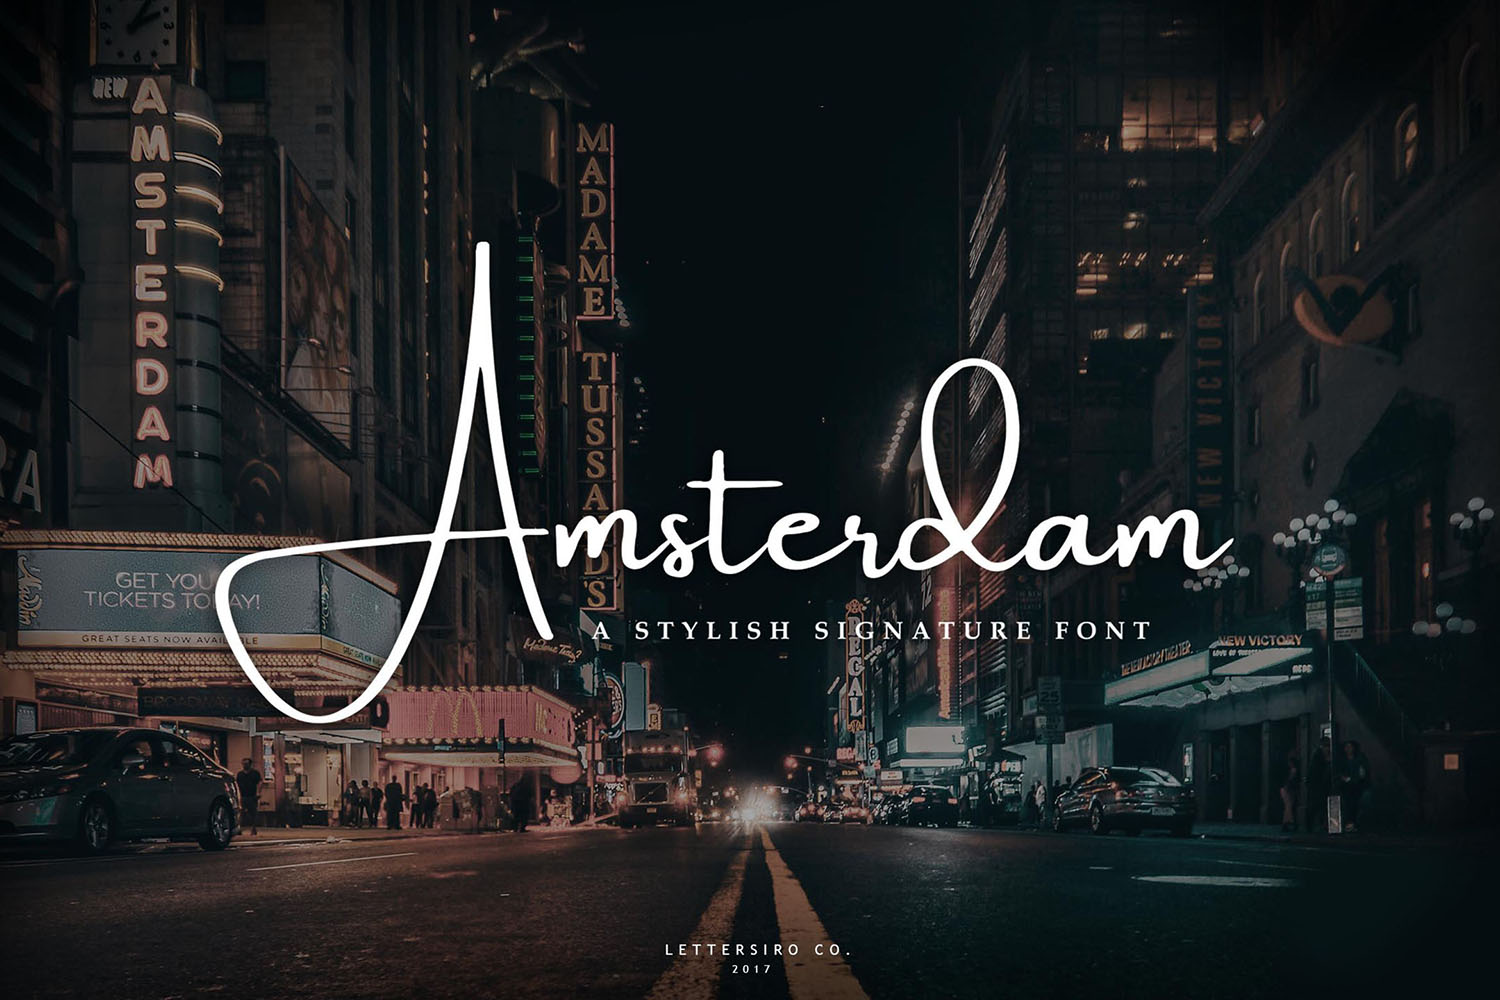 Amsterdam Free Font